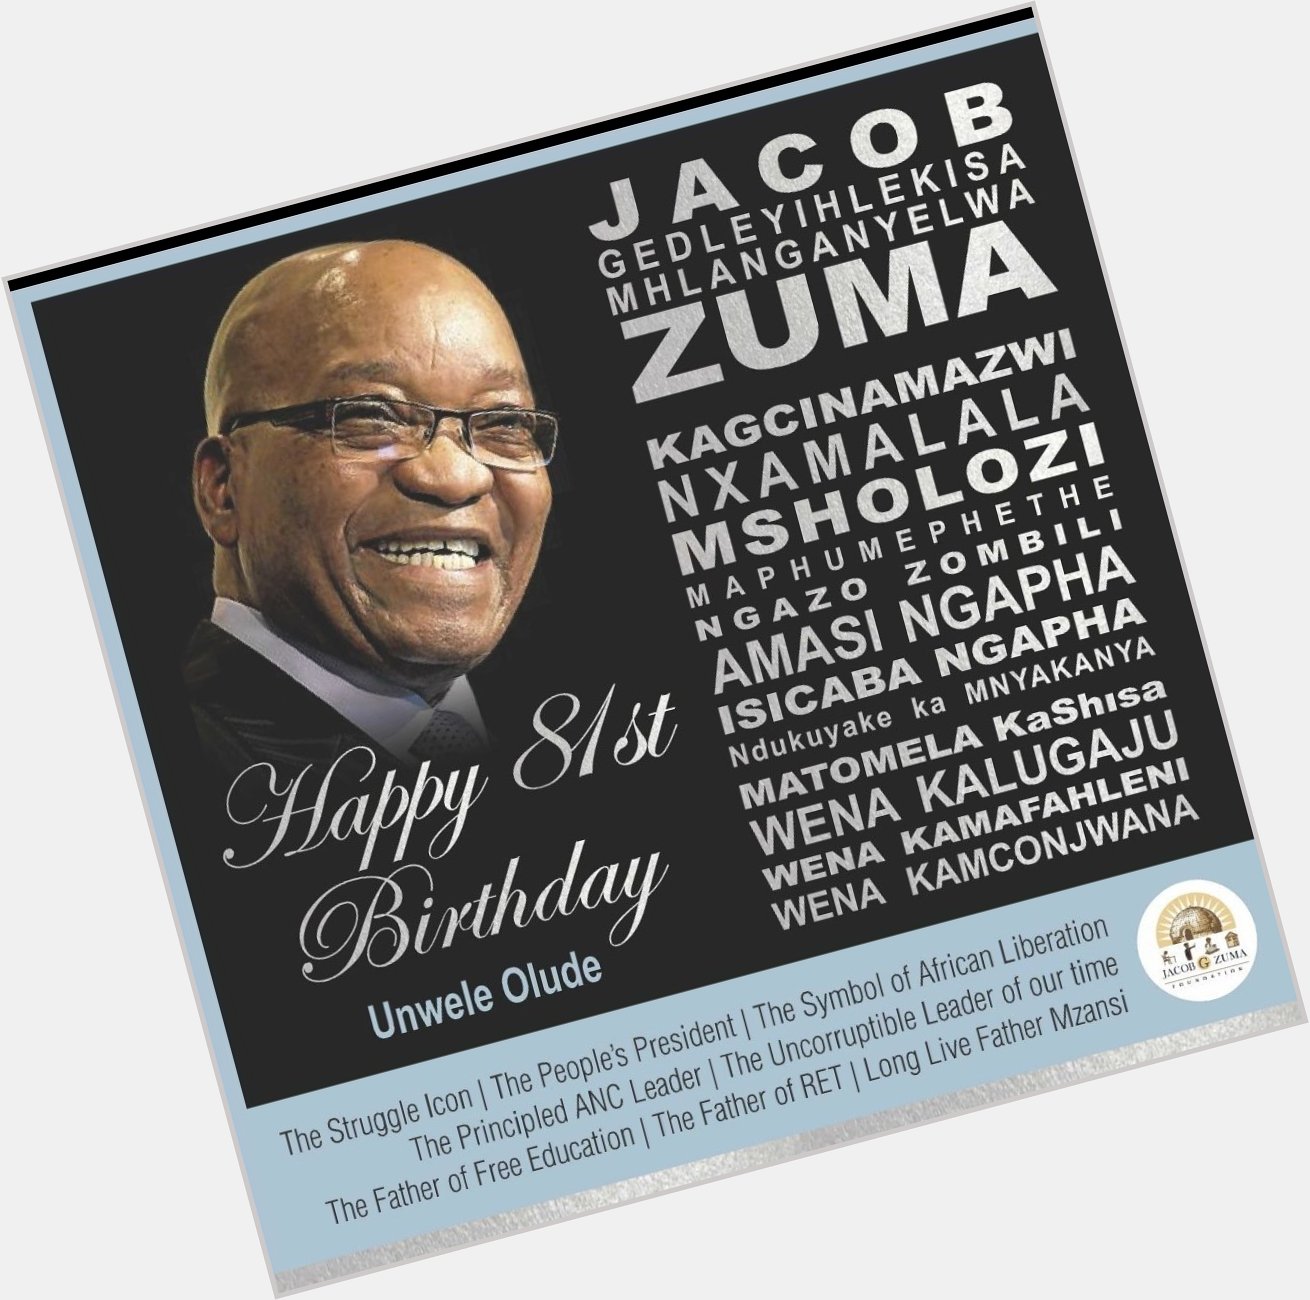 Happy birthday to President Jacob Zuma. Wish you many more years   